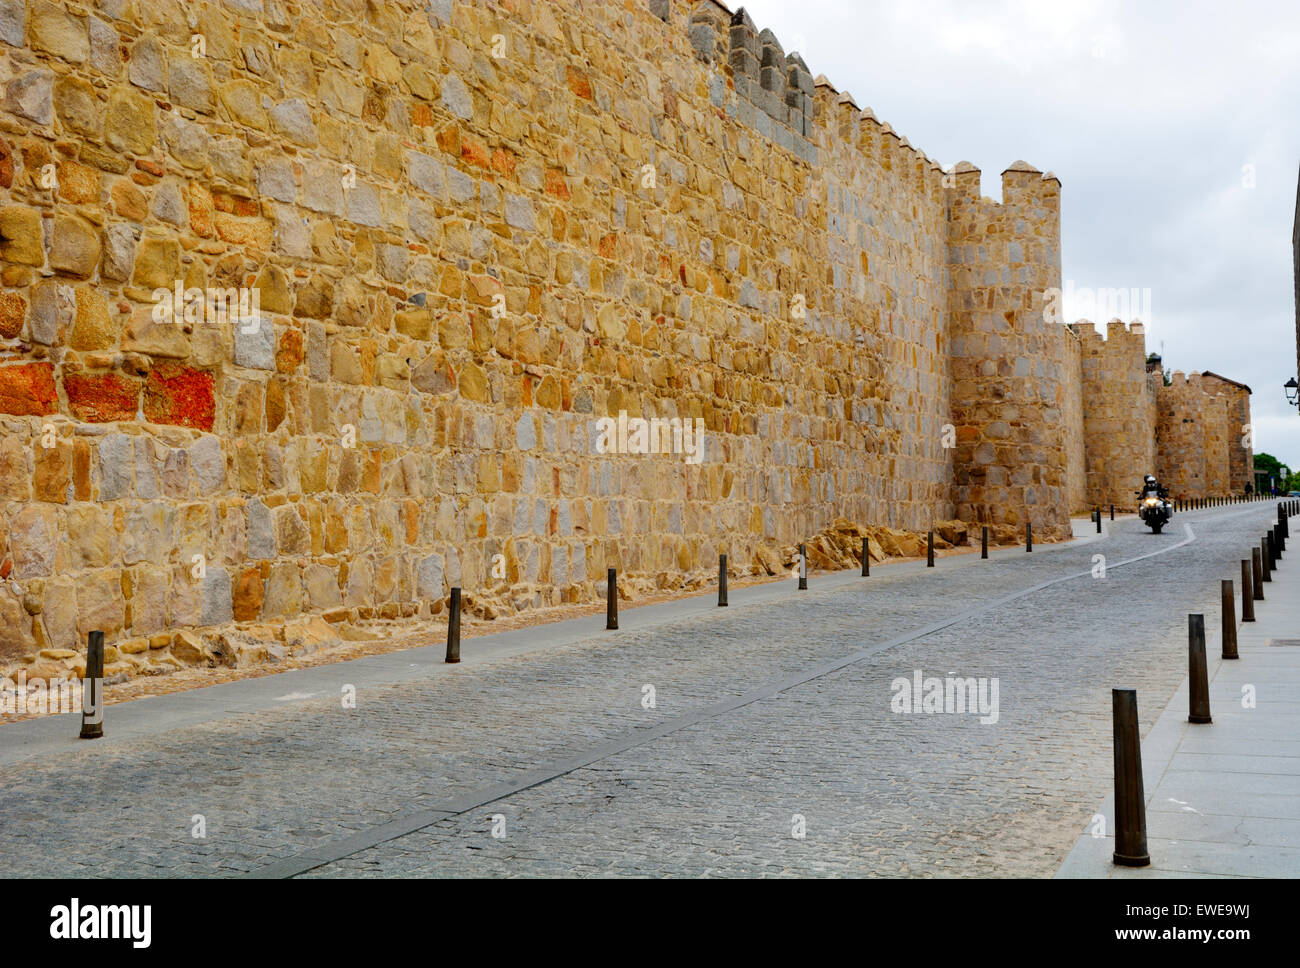 La antigua muralla de la ciudad de Ávila, España Foto de stock